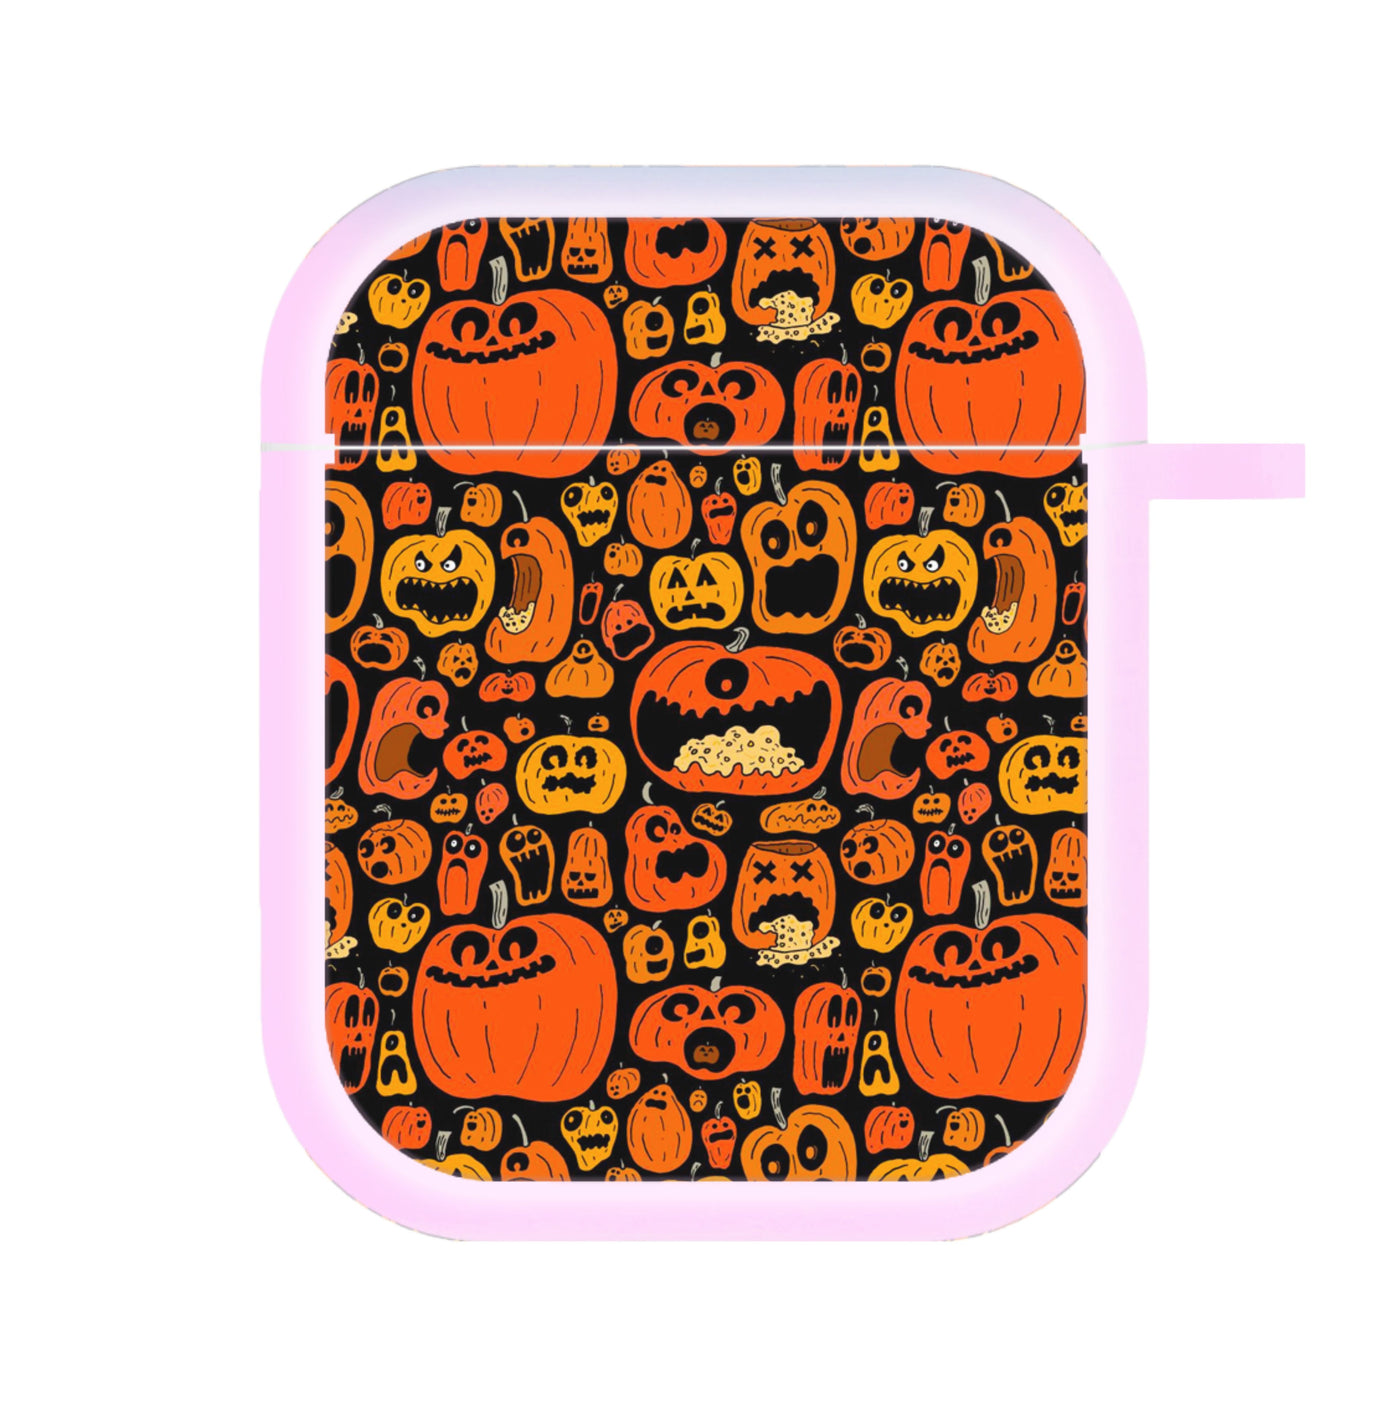 Scary Pumpkin Halloween Pattern AirPods Case